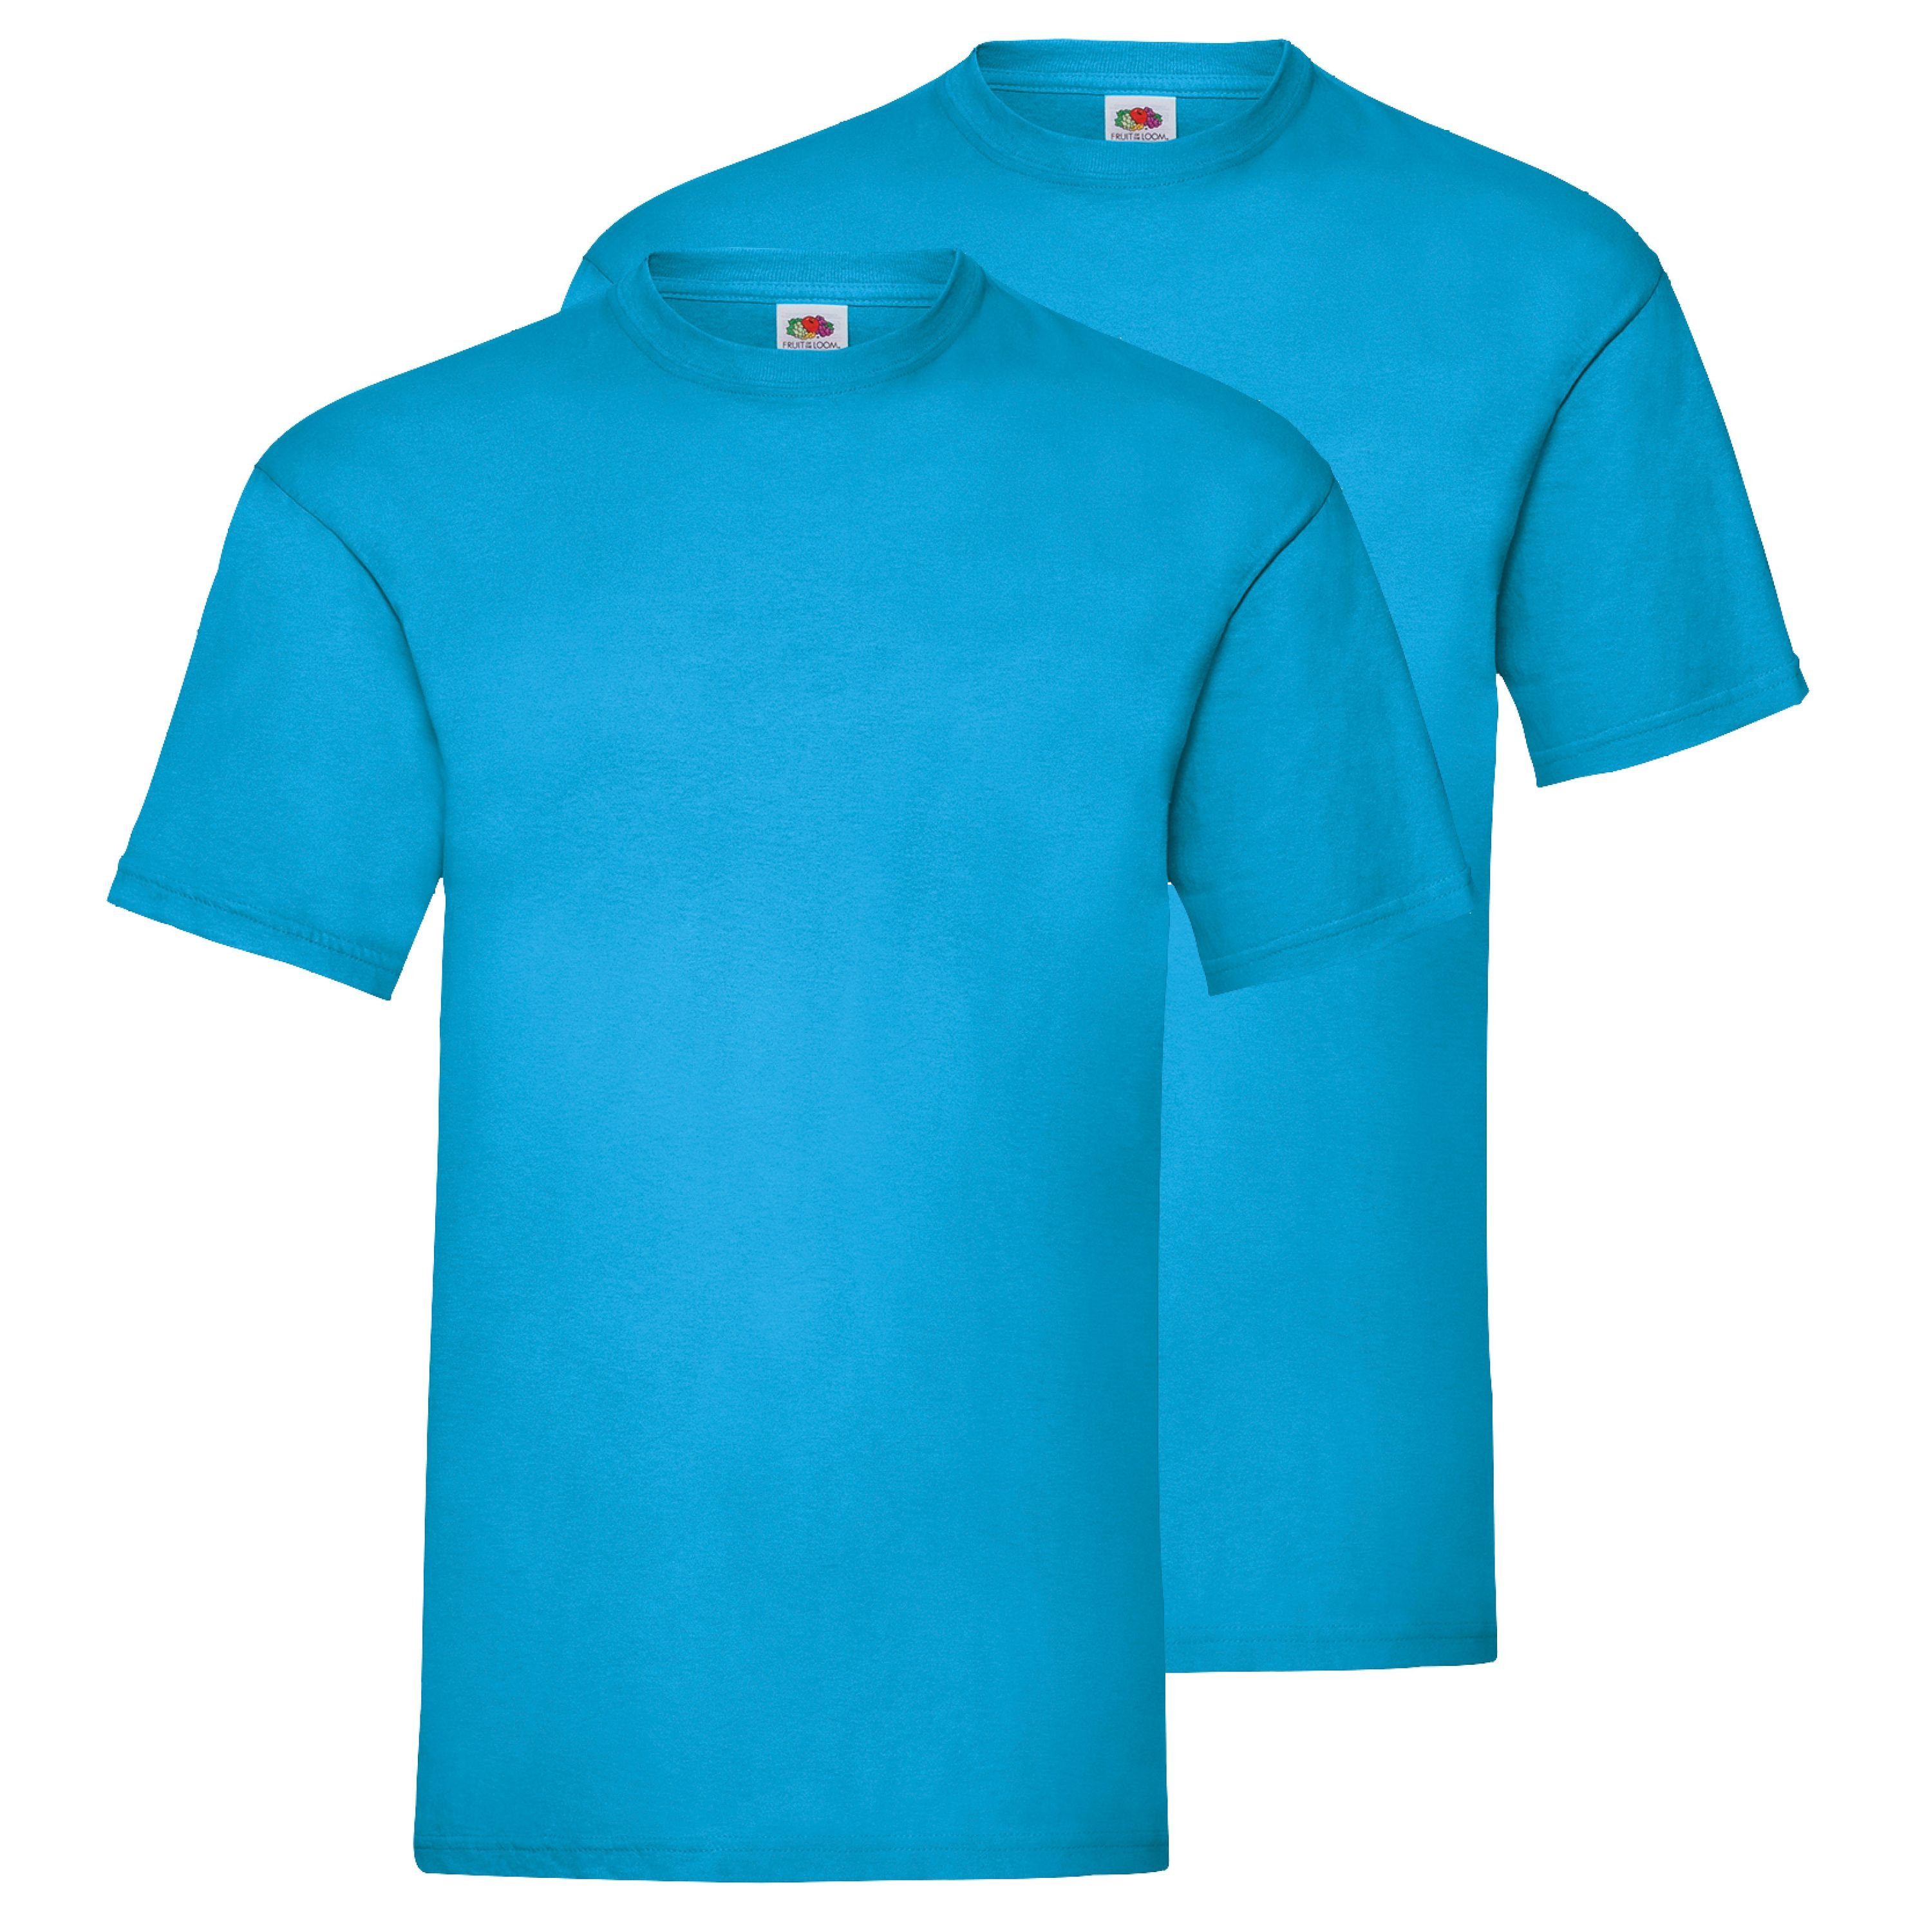 Loom of azurblau T-Shirt Rundhalsshirt Fruit Valueweight the